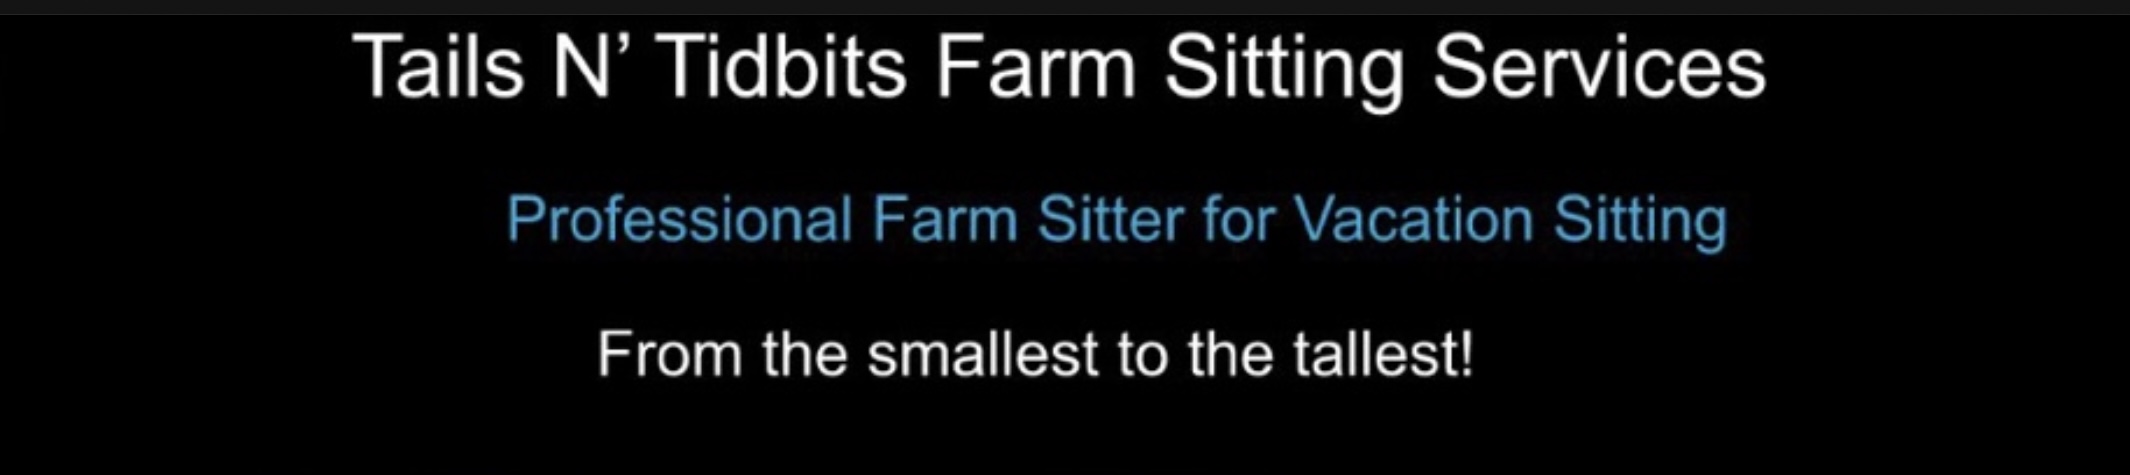 Tails N’ Tidbits Farm Sitting Services